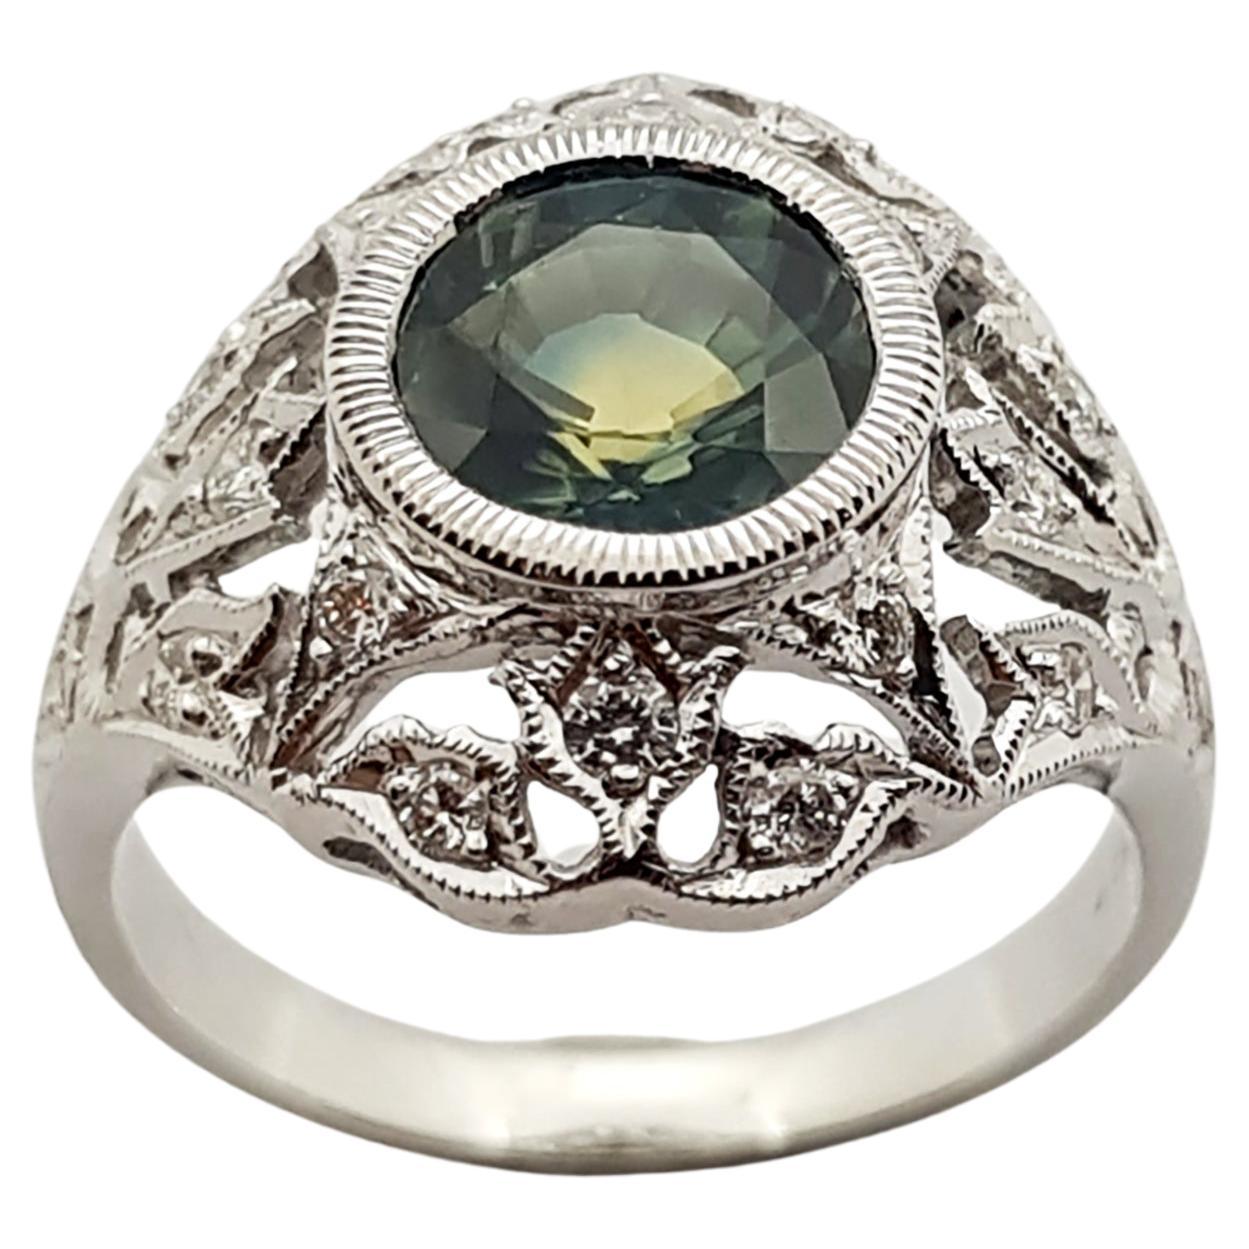 Green Sapphire with Diamond Ring Set in 18 Karat White Gold Settings